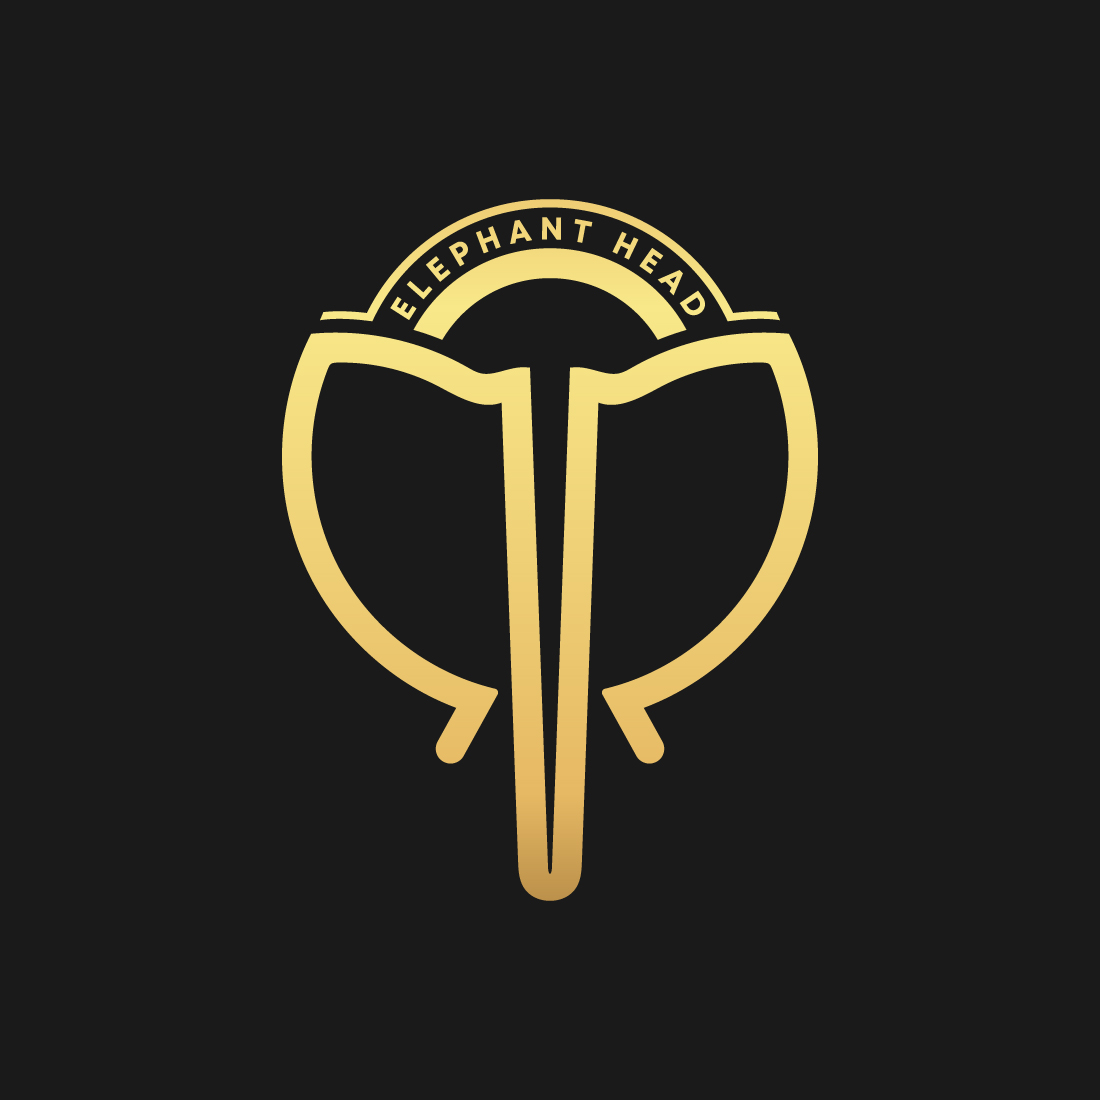 Elephant Head Luxury logo design preview image.